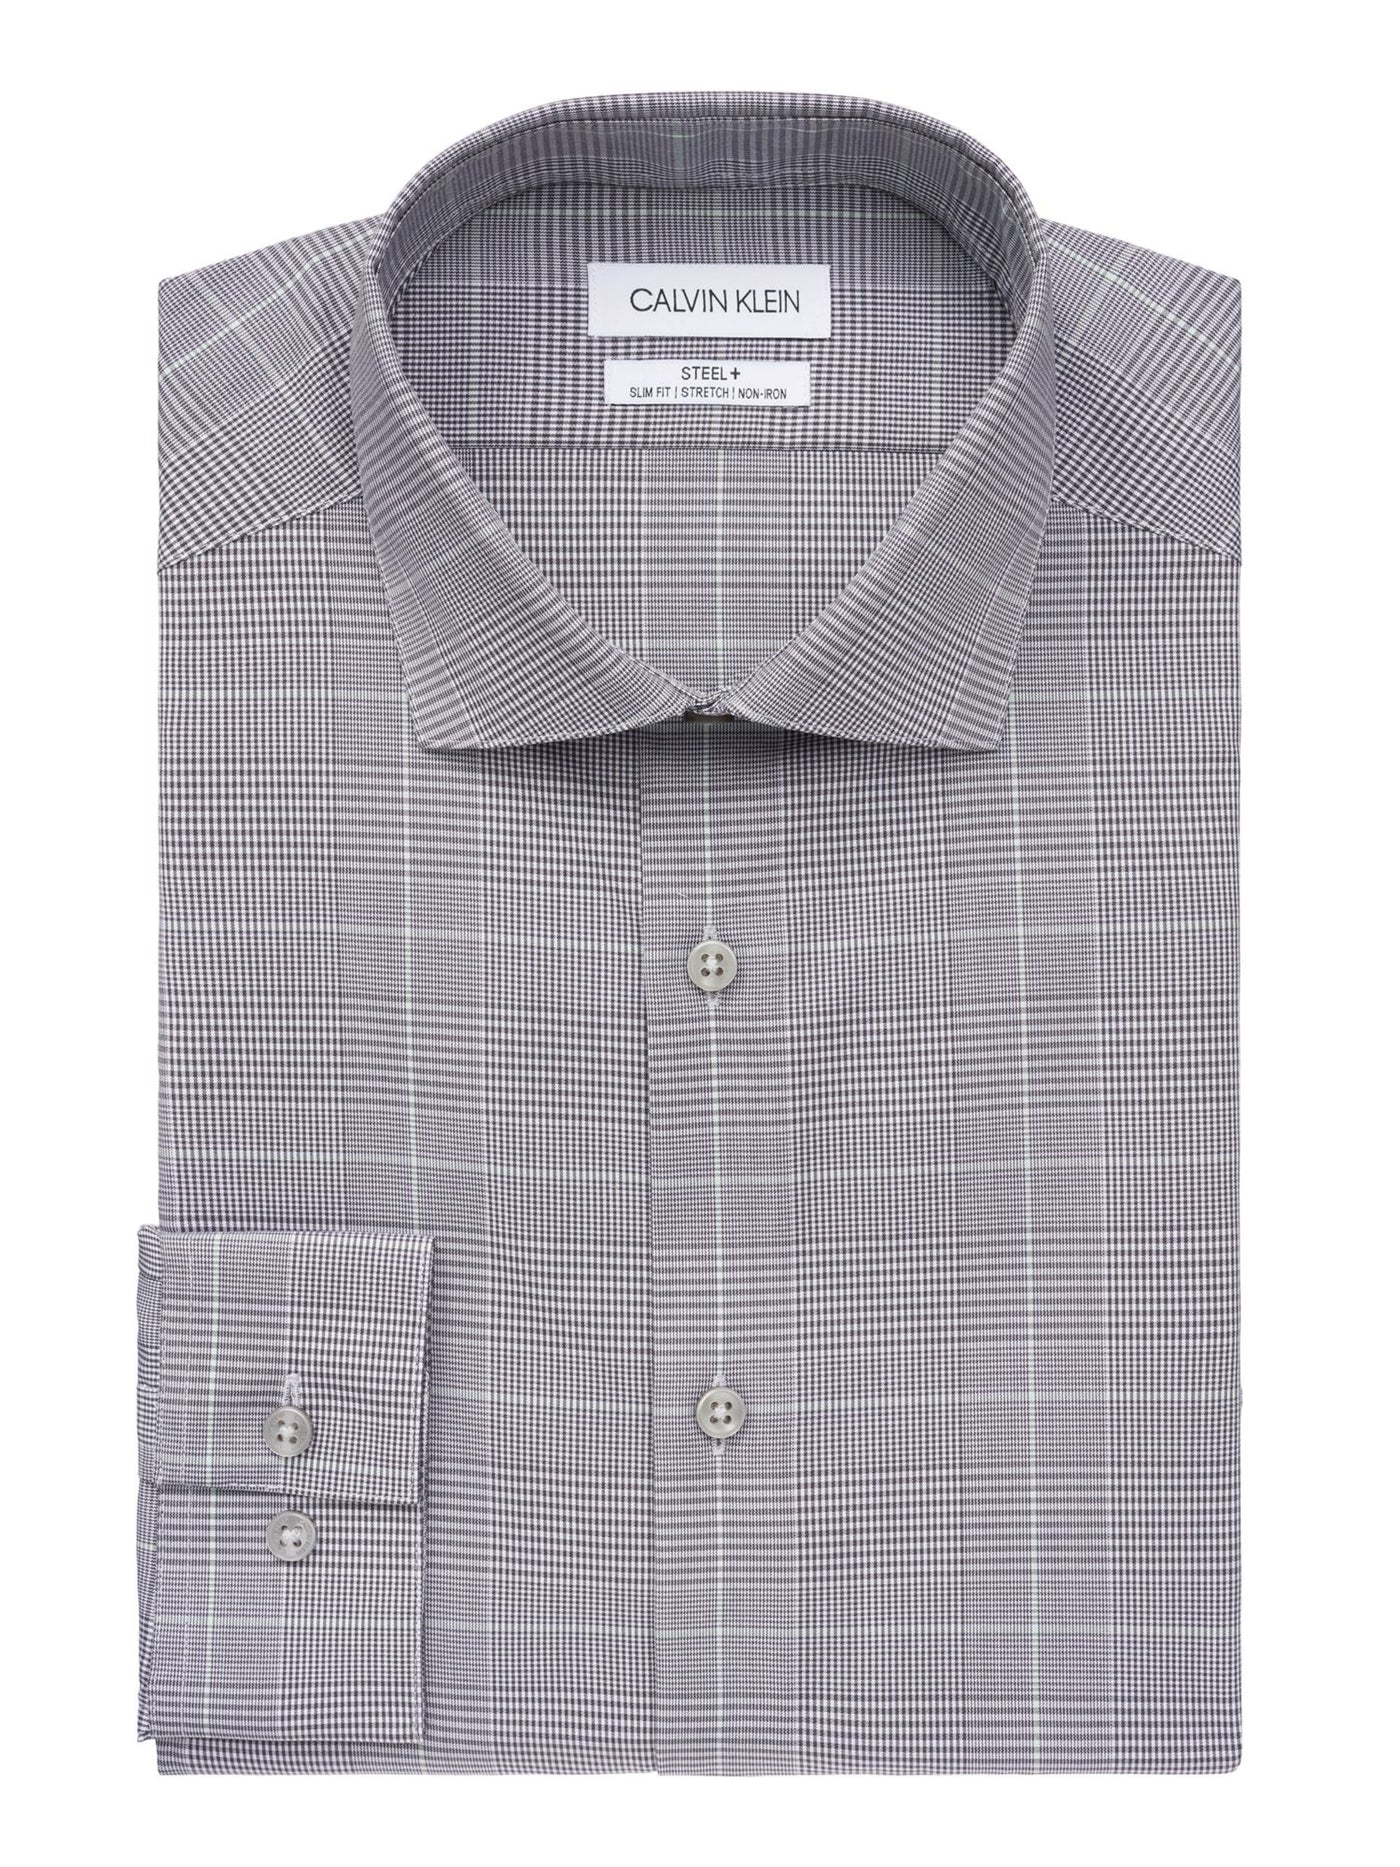 CALVIN KLEIN Mens Steel Gray Plaid Spread Collar Slim Fit Wrinkle Resistant Dress Shirt 2XL 18- 34/35